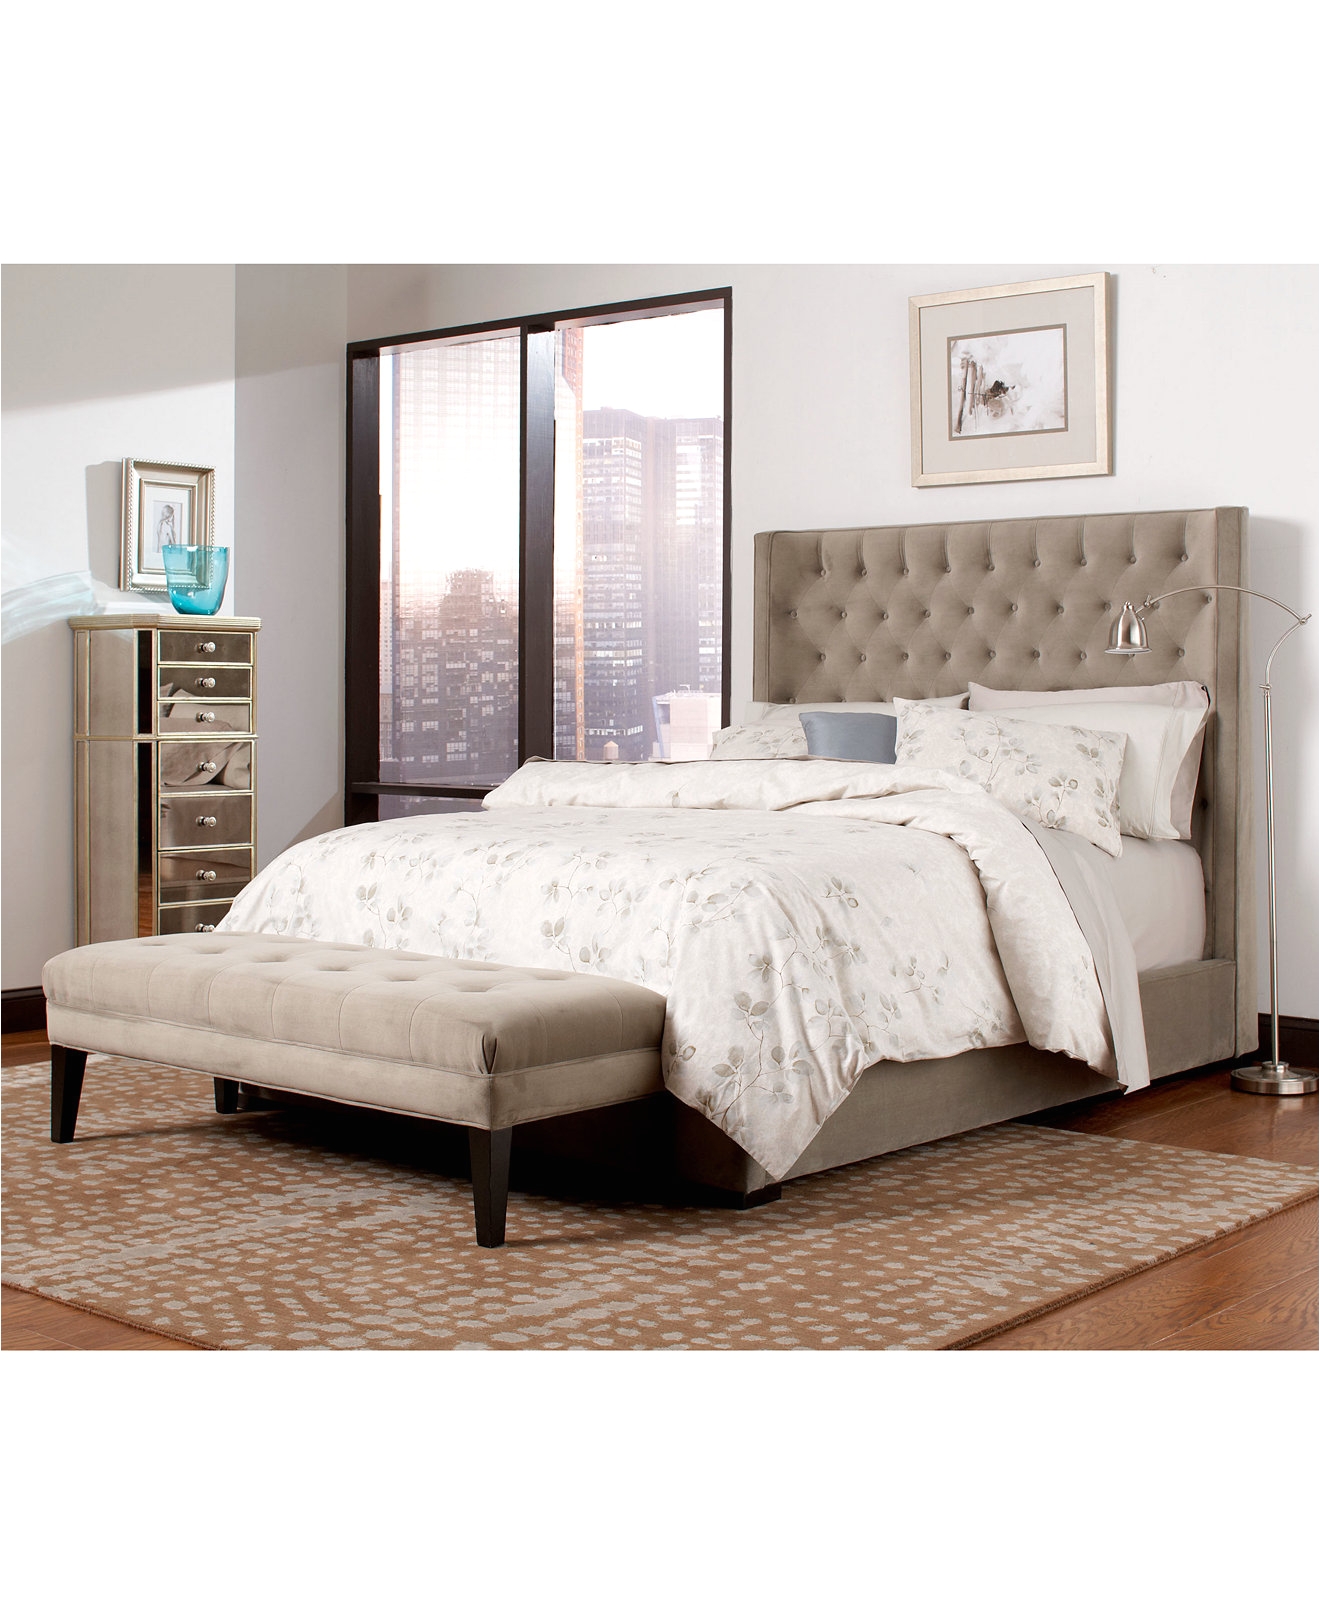 macy s bedroom furniture macys bedroom furniture solid wood sets girls wicker design grey osopalas com